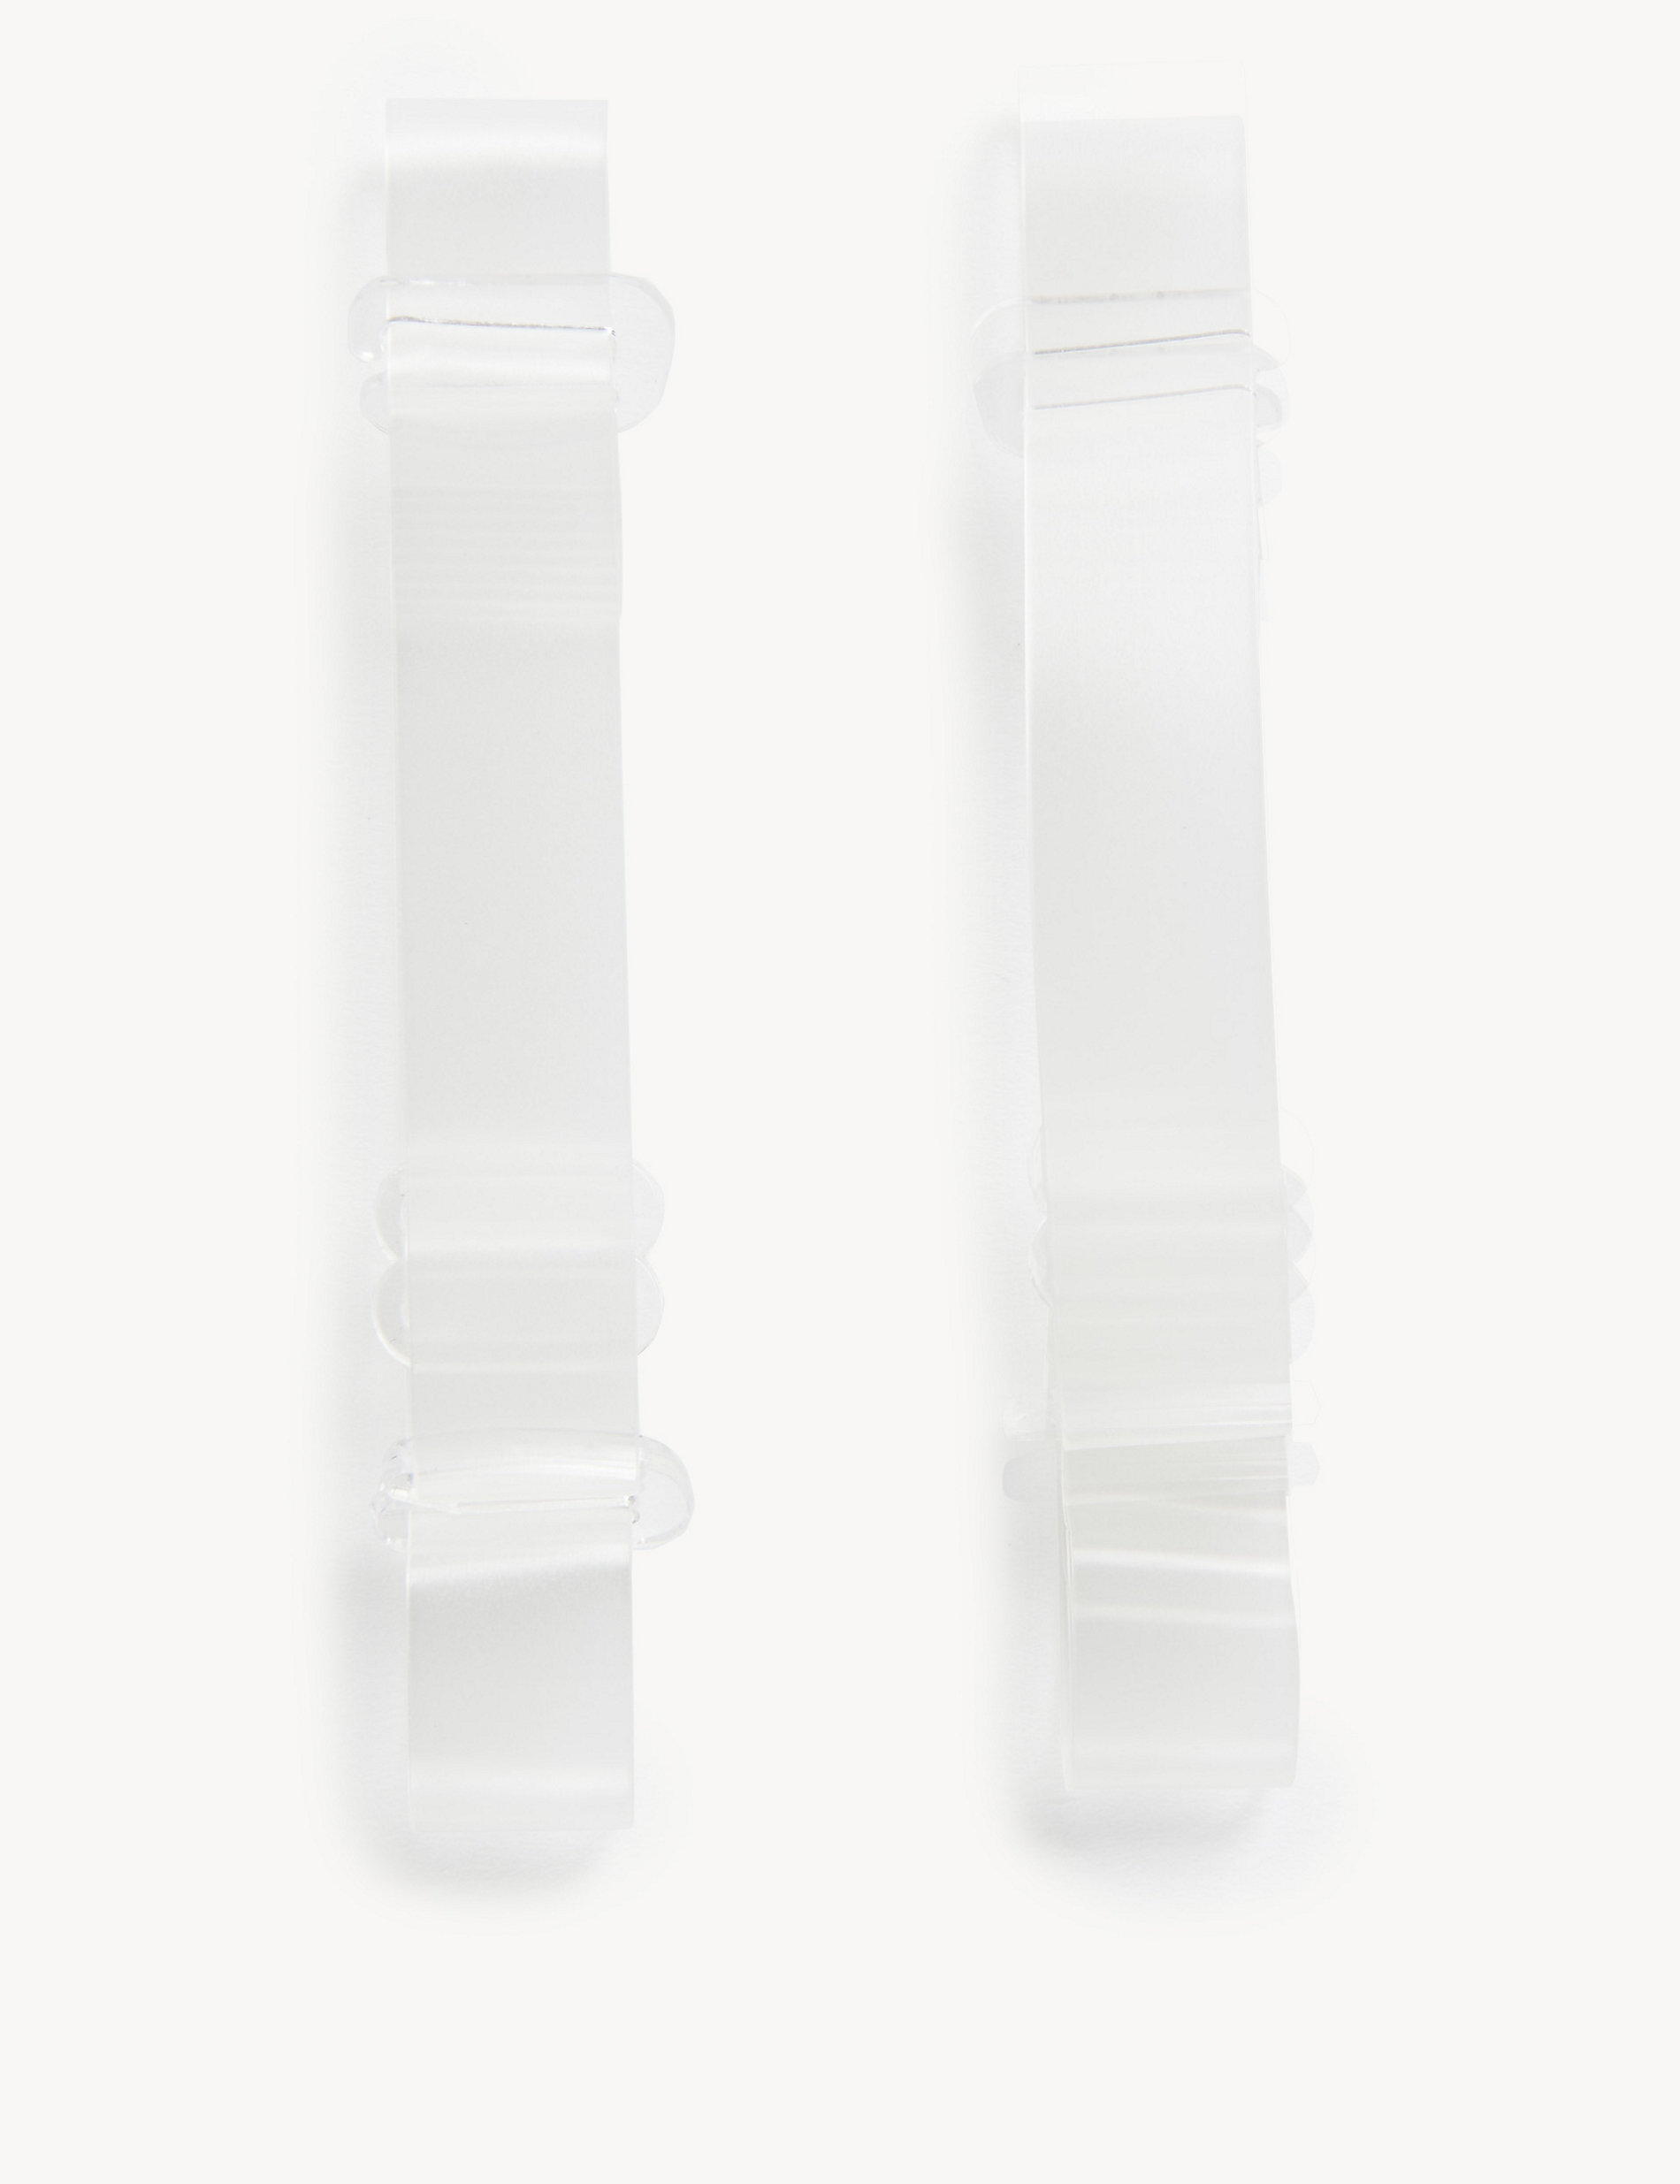 Tirantes de sujetador transparentes de quita y pon de anchura estándar